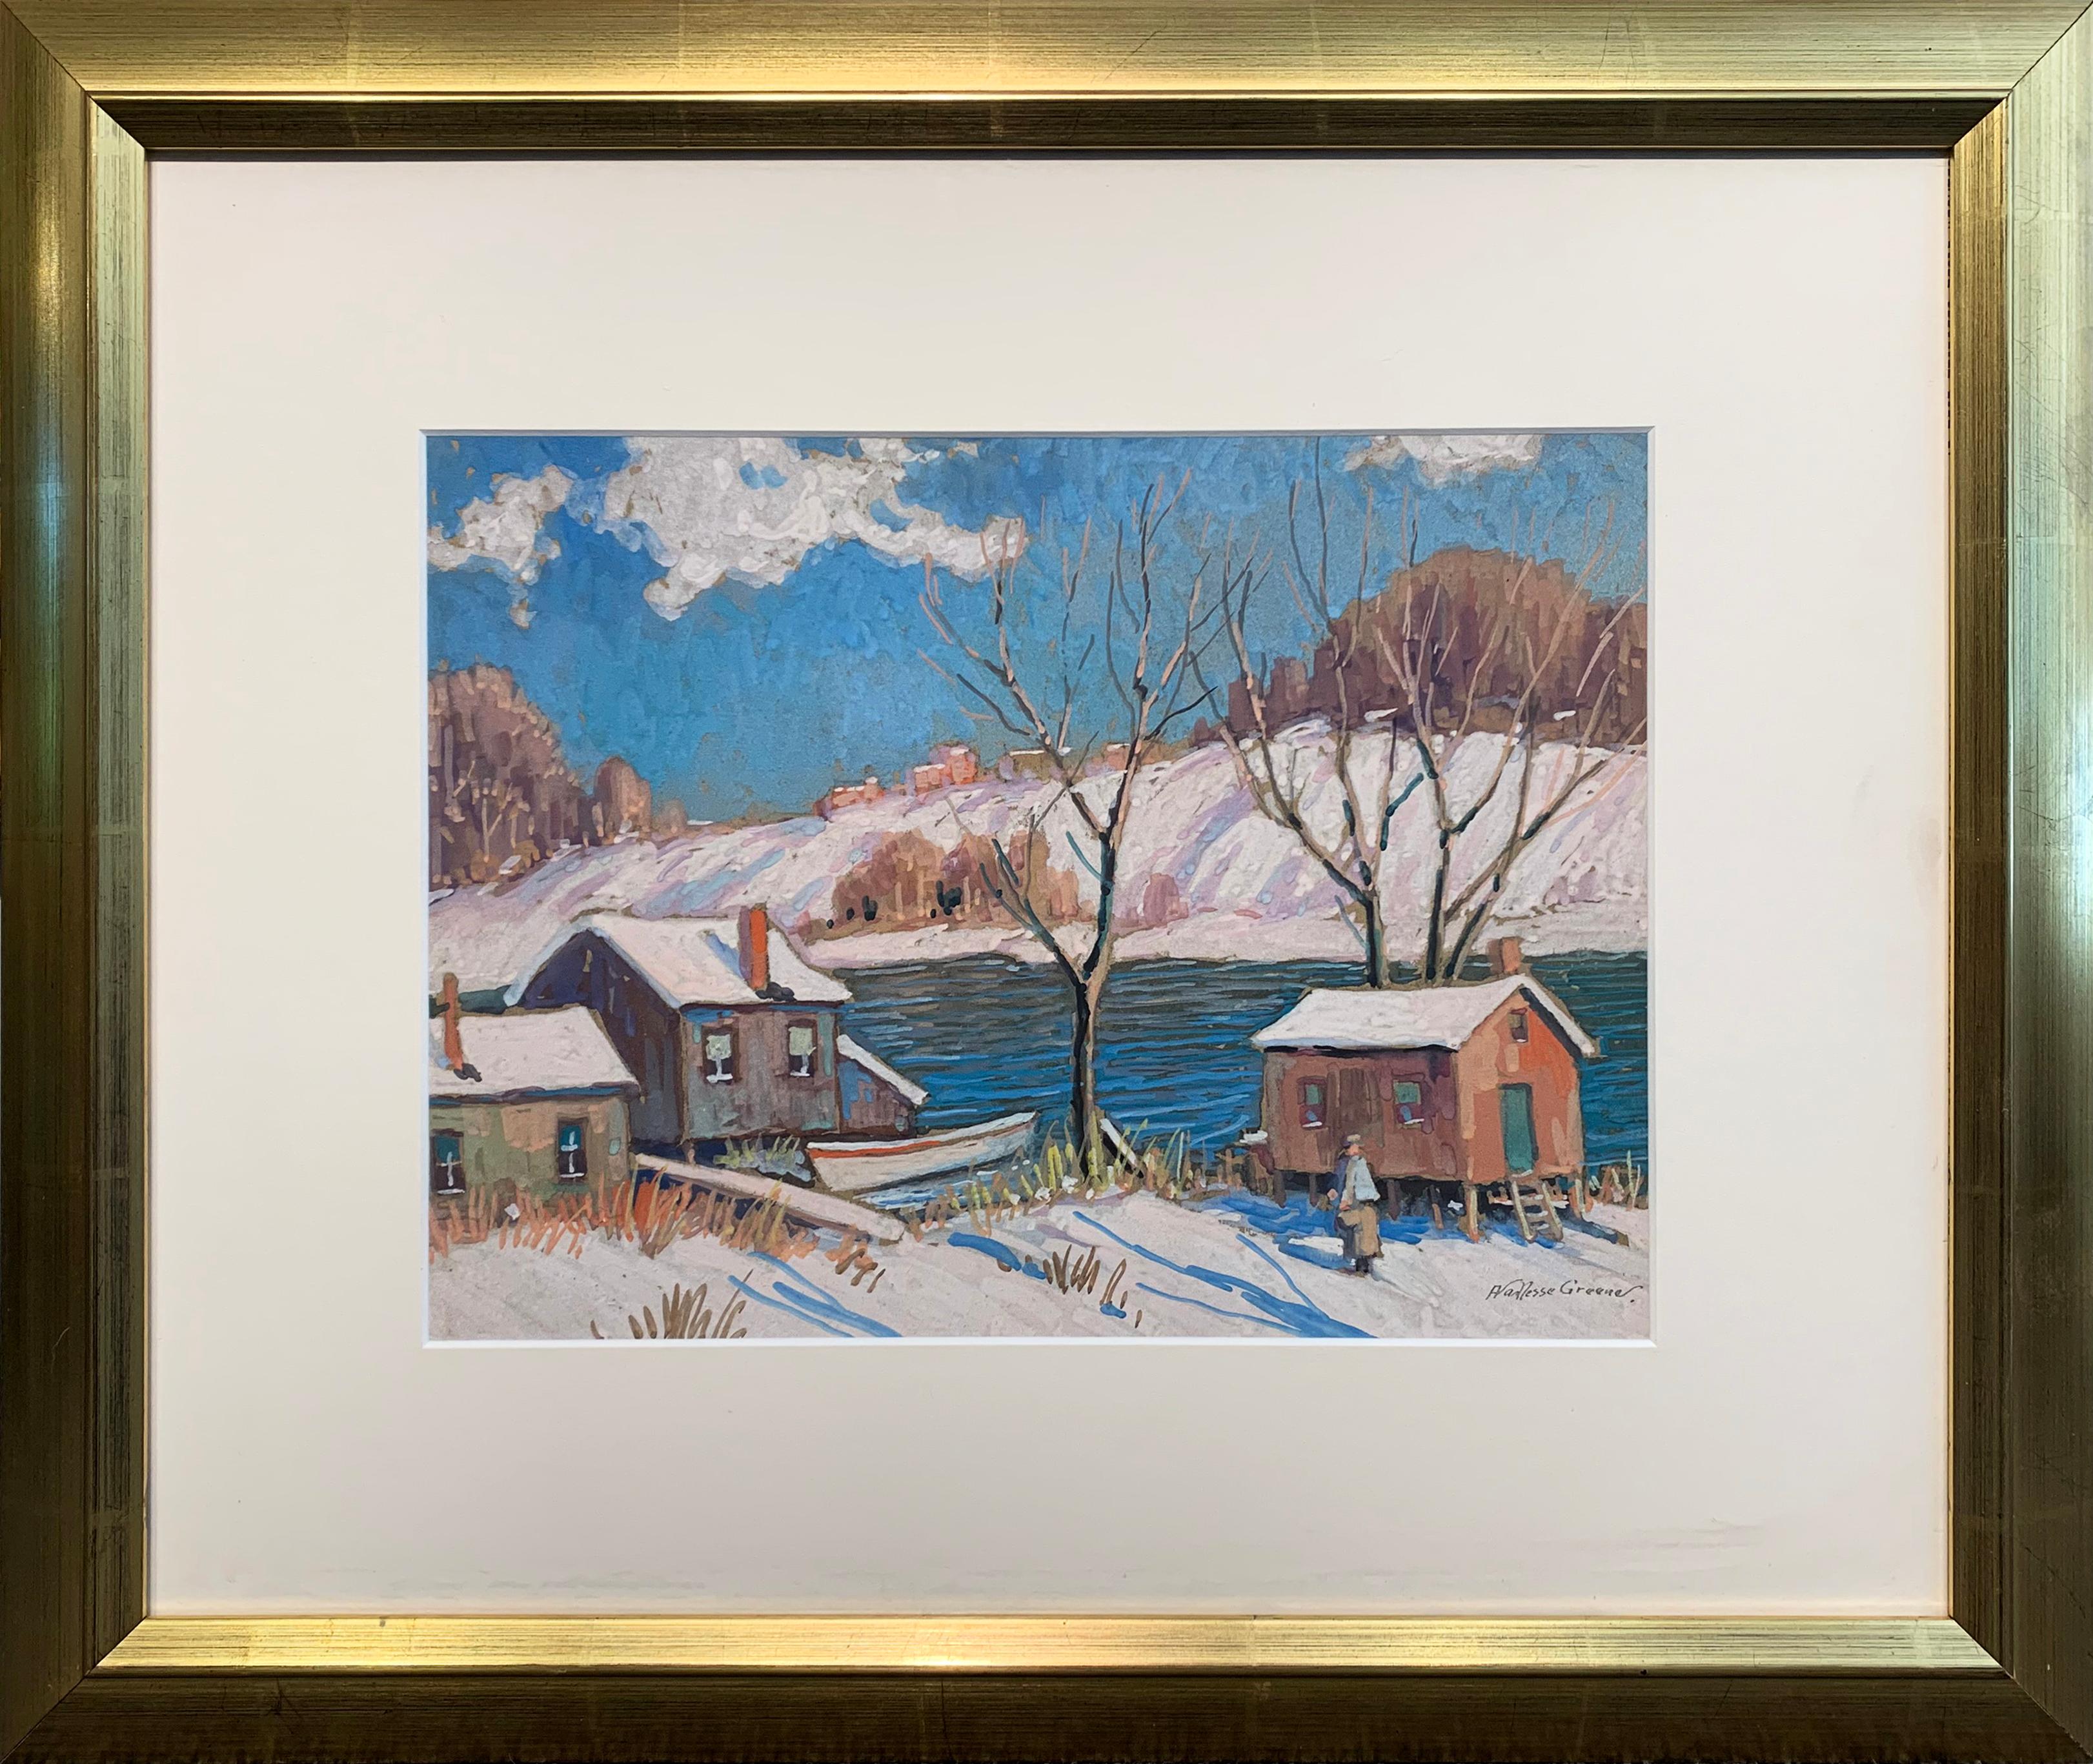 River Cabin, Winter, American Impressionist snow Landscape, Signed and Framed